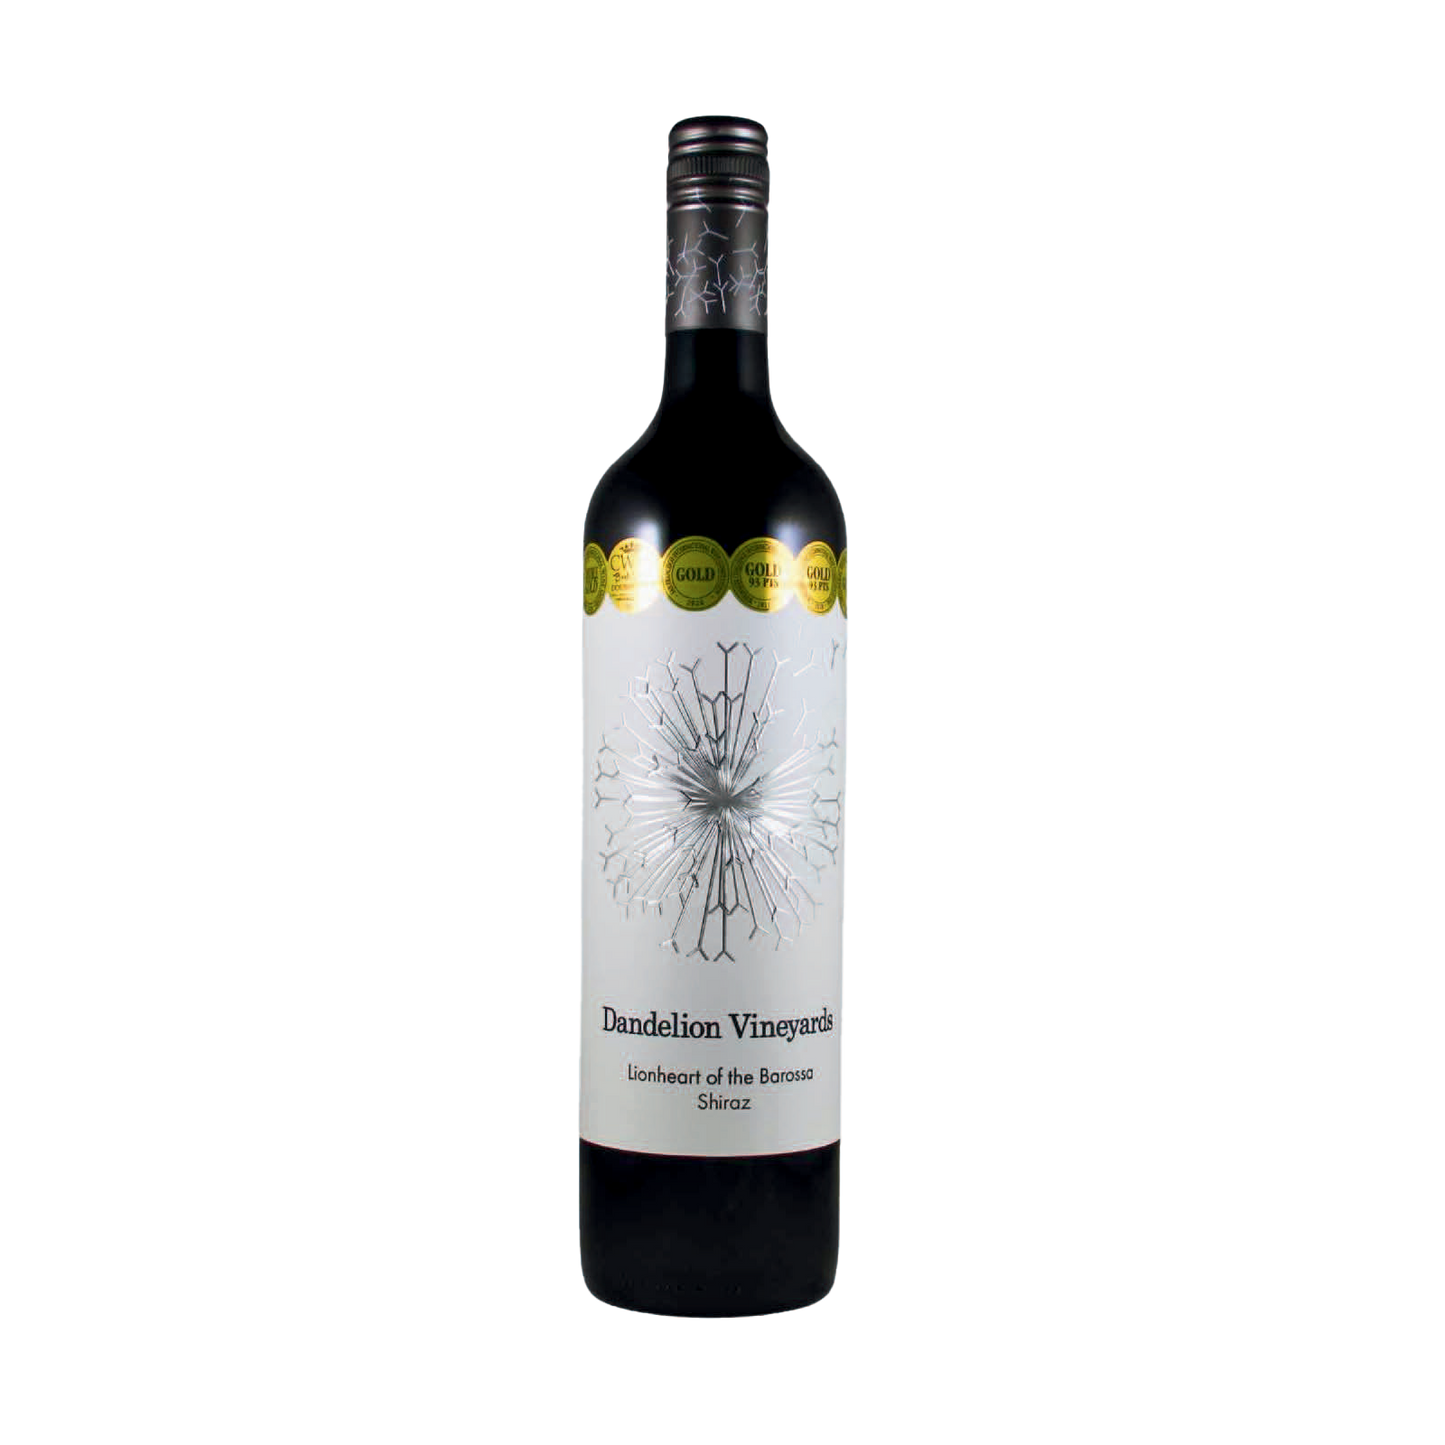 A bottle of Dandelion Vineyards 2019 'Lionheart of the Barossa' Shiraz